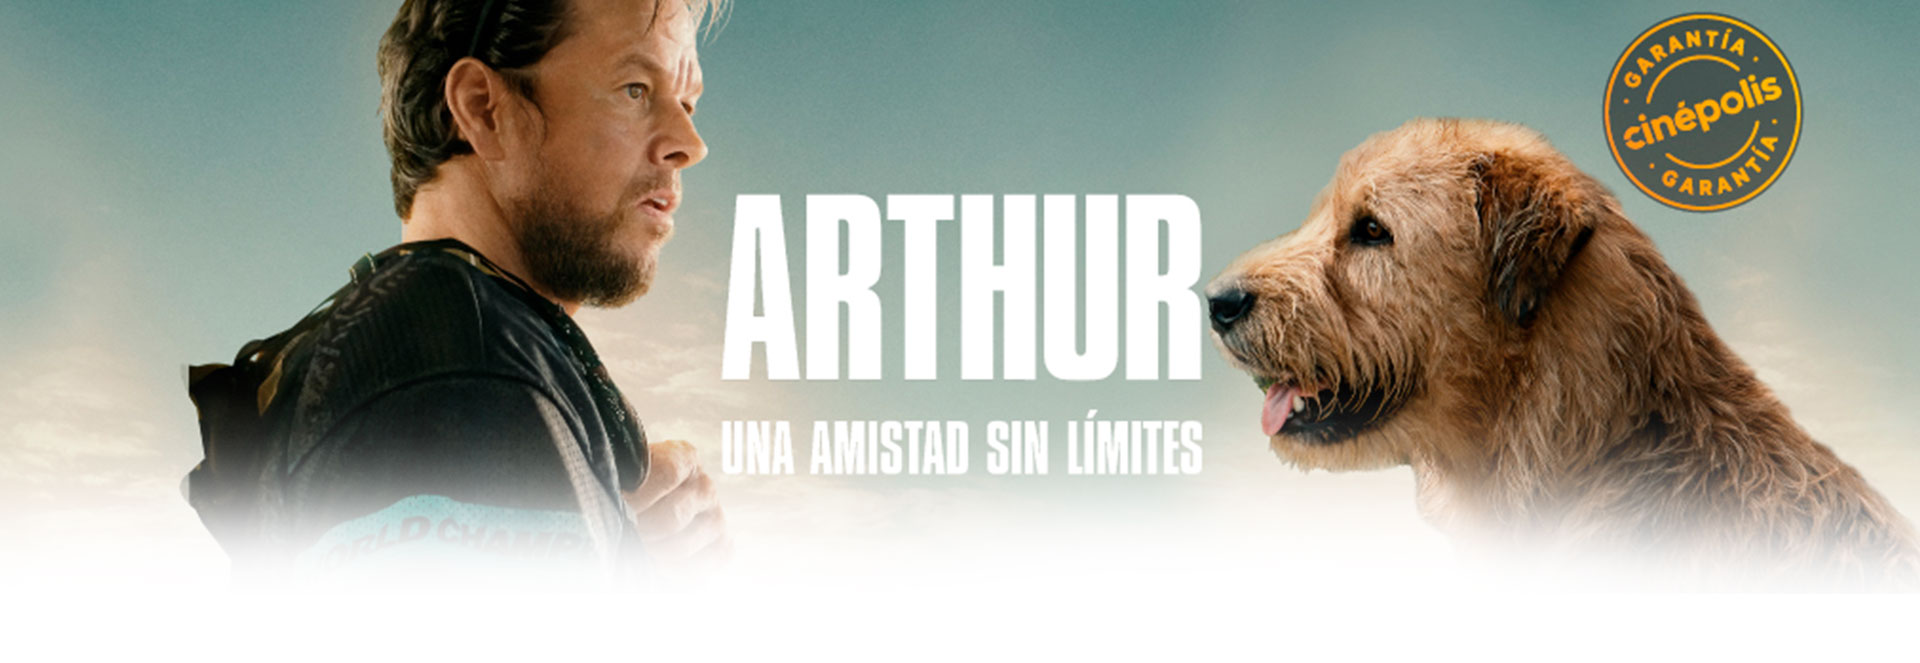 Banner Arthur: Una Amistad Sin Límites | Garantía Cinépolis